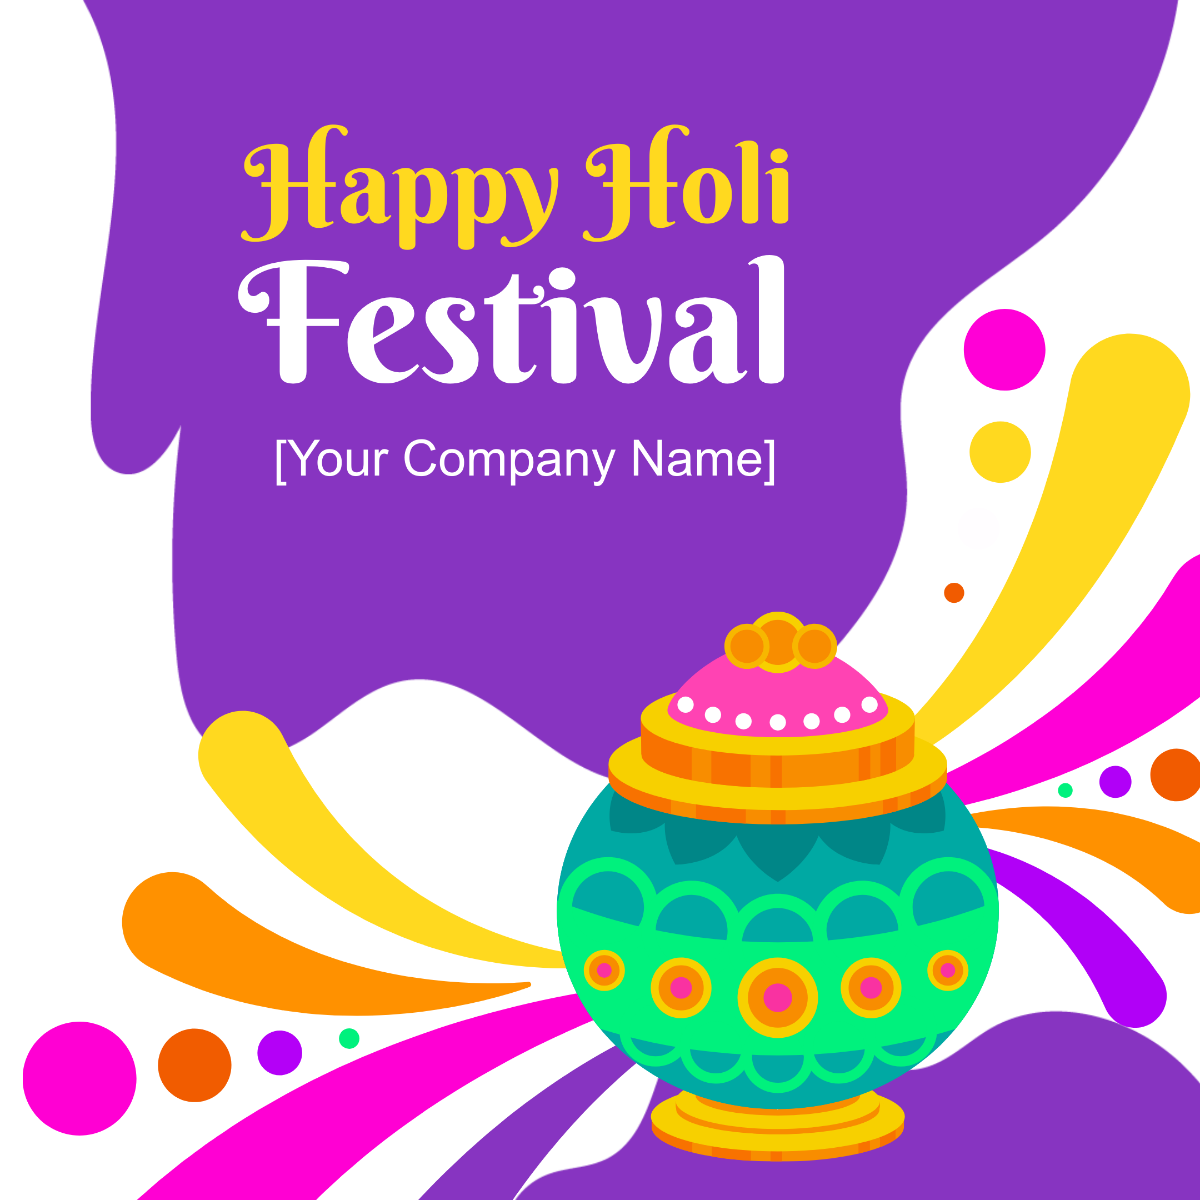 Happy Holi Festival Facebook Post Template